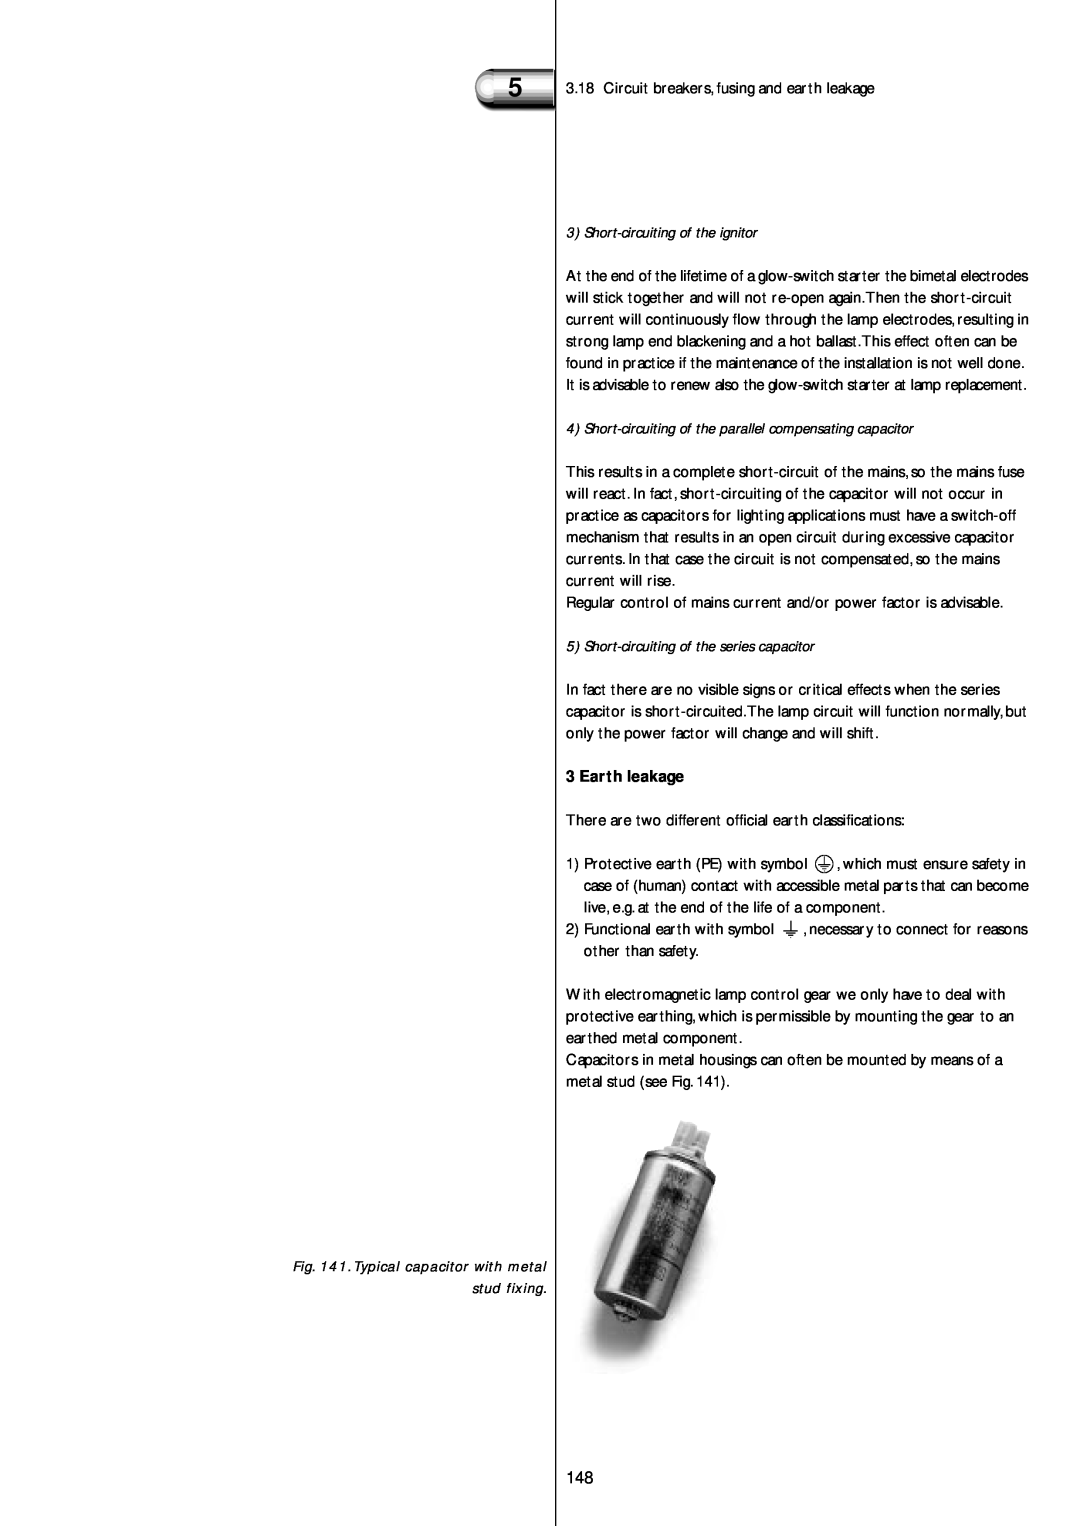 Philips Electromagnetic Lamp manual Short-circuitingof the ignitor, Short-circuitingof the series capacitor, Earth leakage 